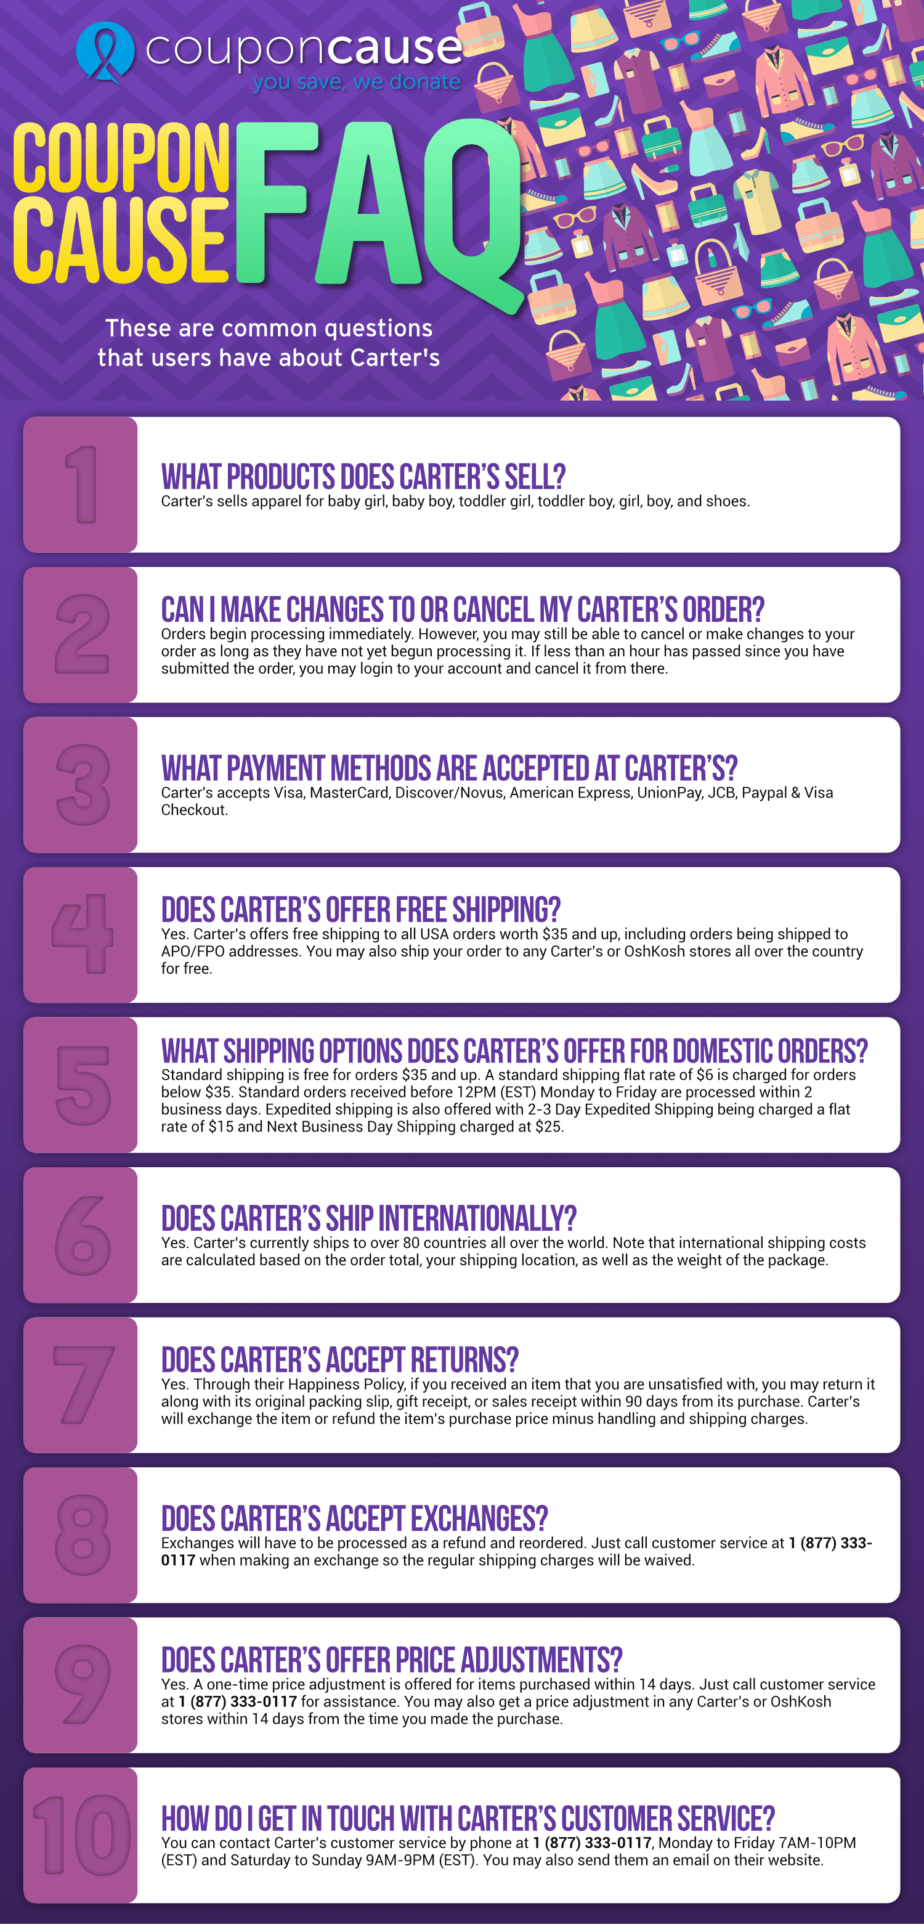 Carter’s Infographic Order Coupon Cause FAQ (C.C. FAQ)